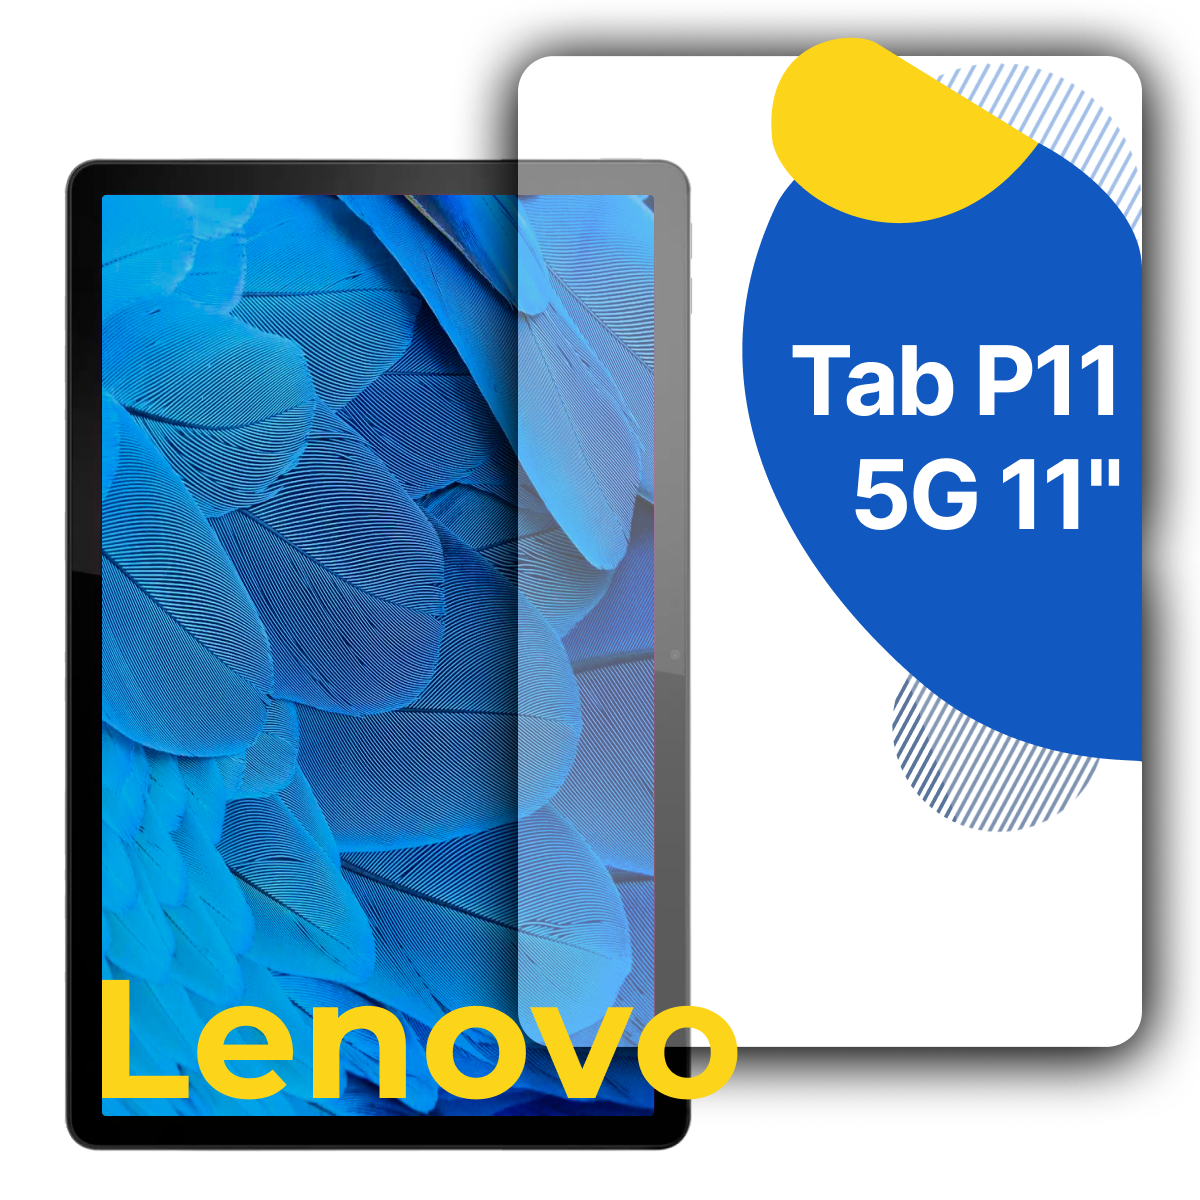 Защитное полноэкранное стекло на планшет Lenovo Tab P11 5G 11" / Противоударное стекло для планшета Леново Таб П11 5Г 11", Прозрачное